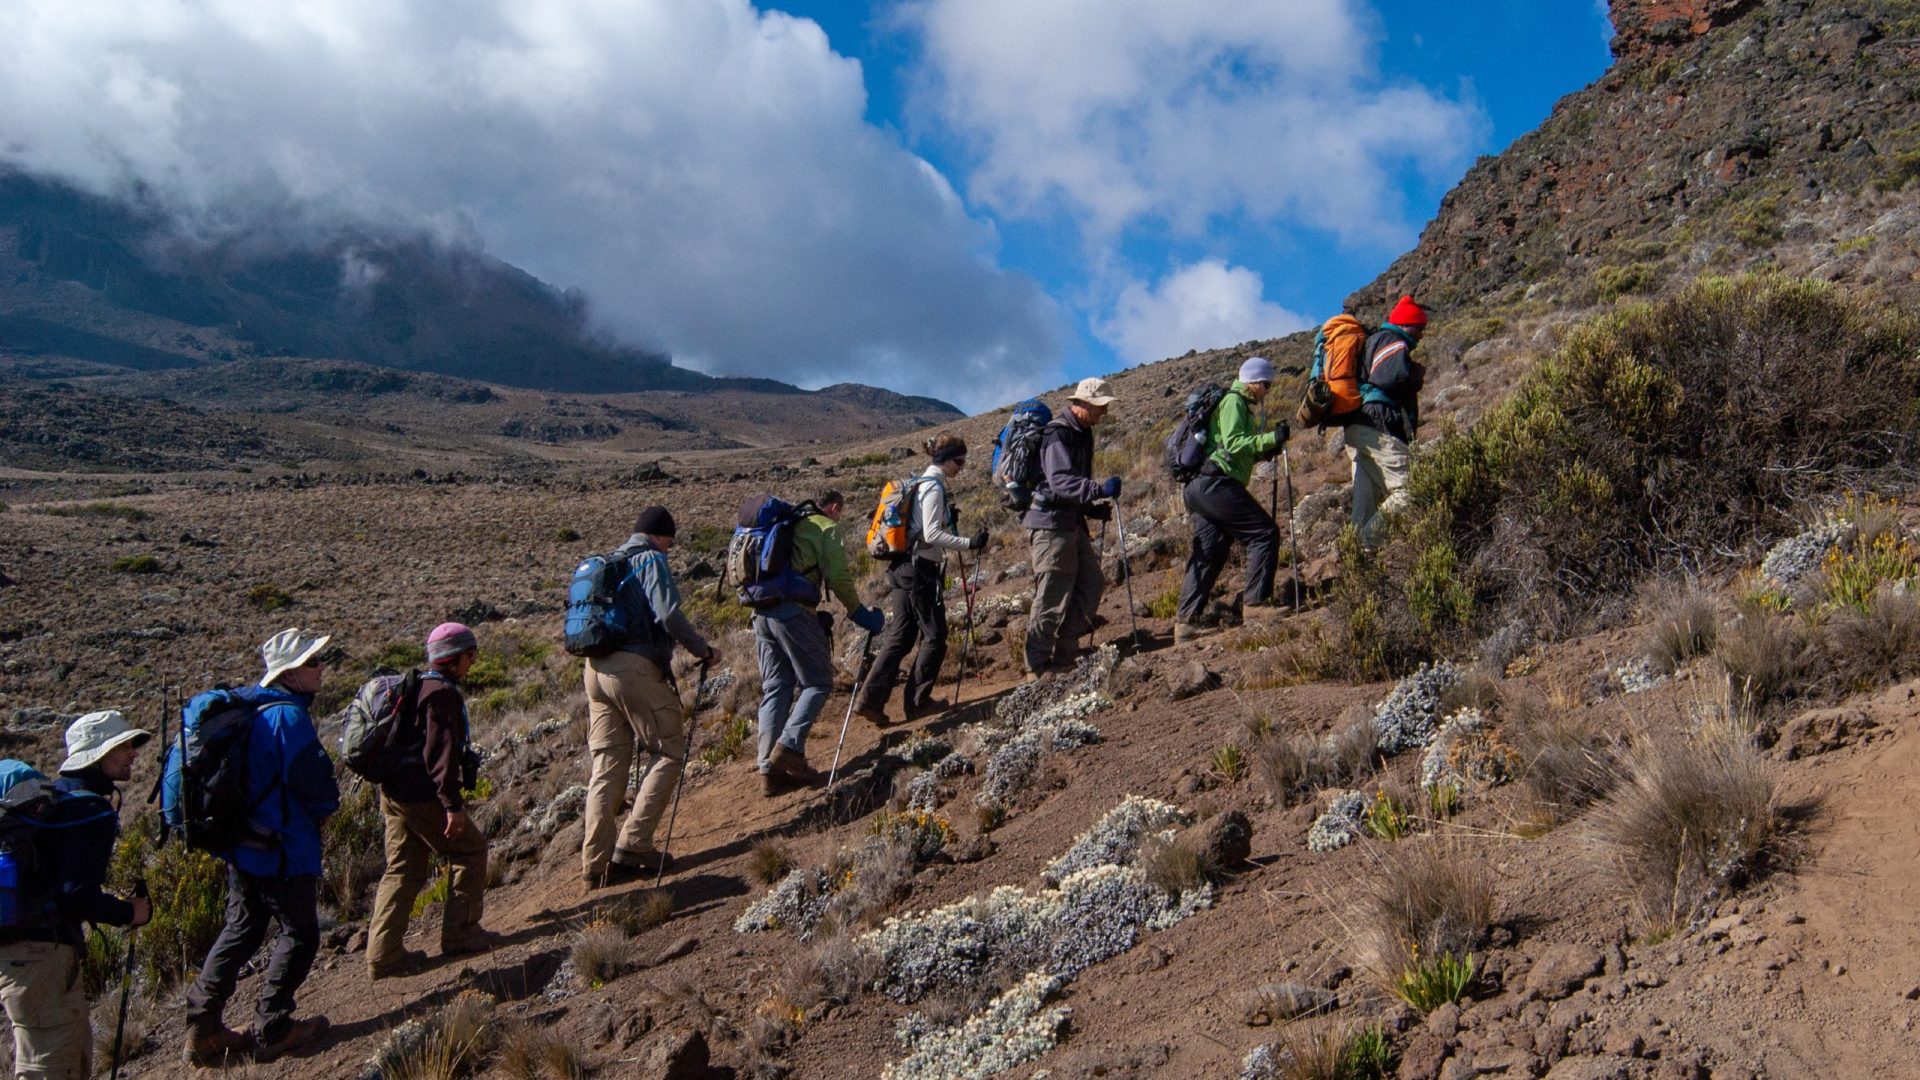 Porters and trekkers on Kilimanjaro